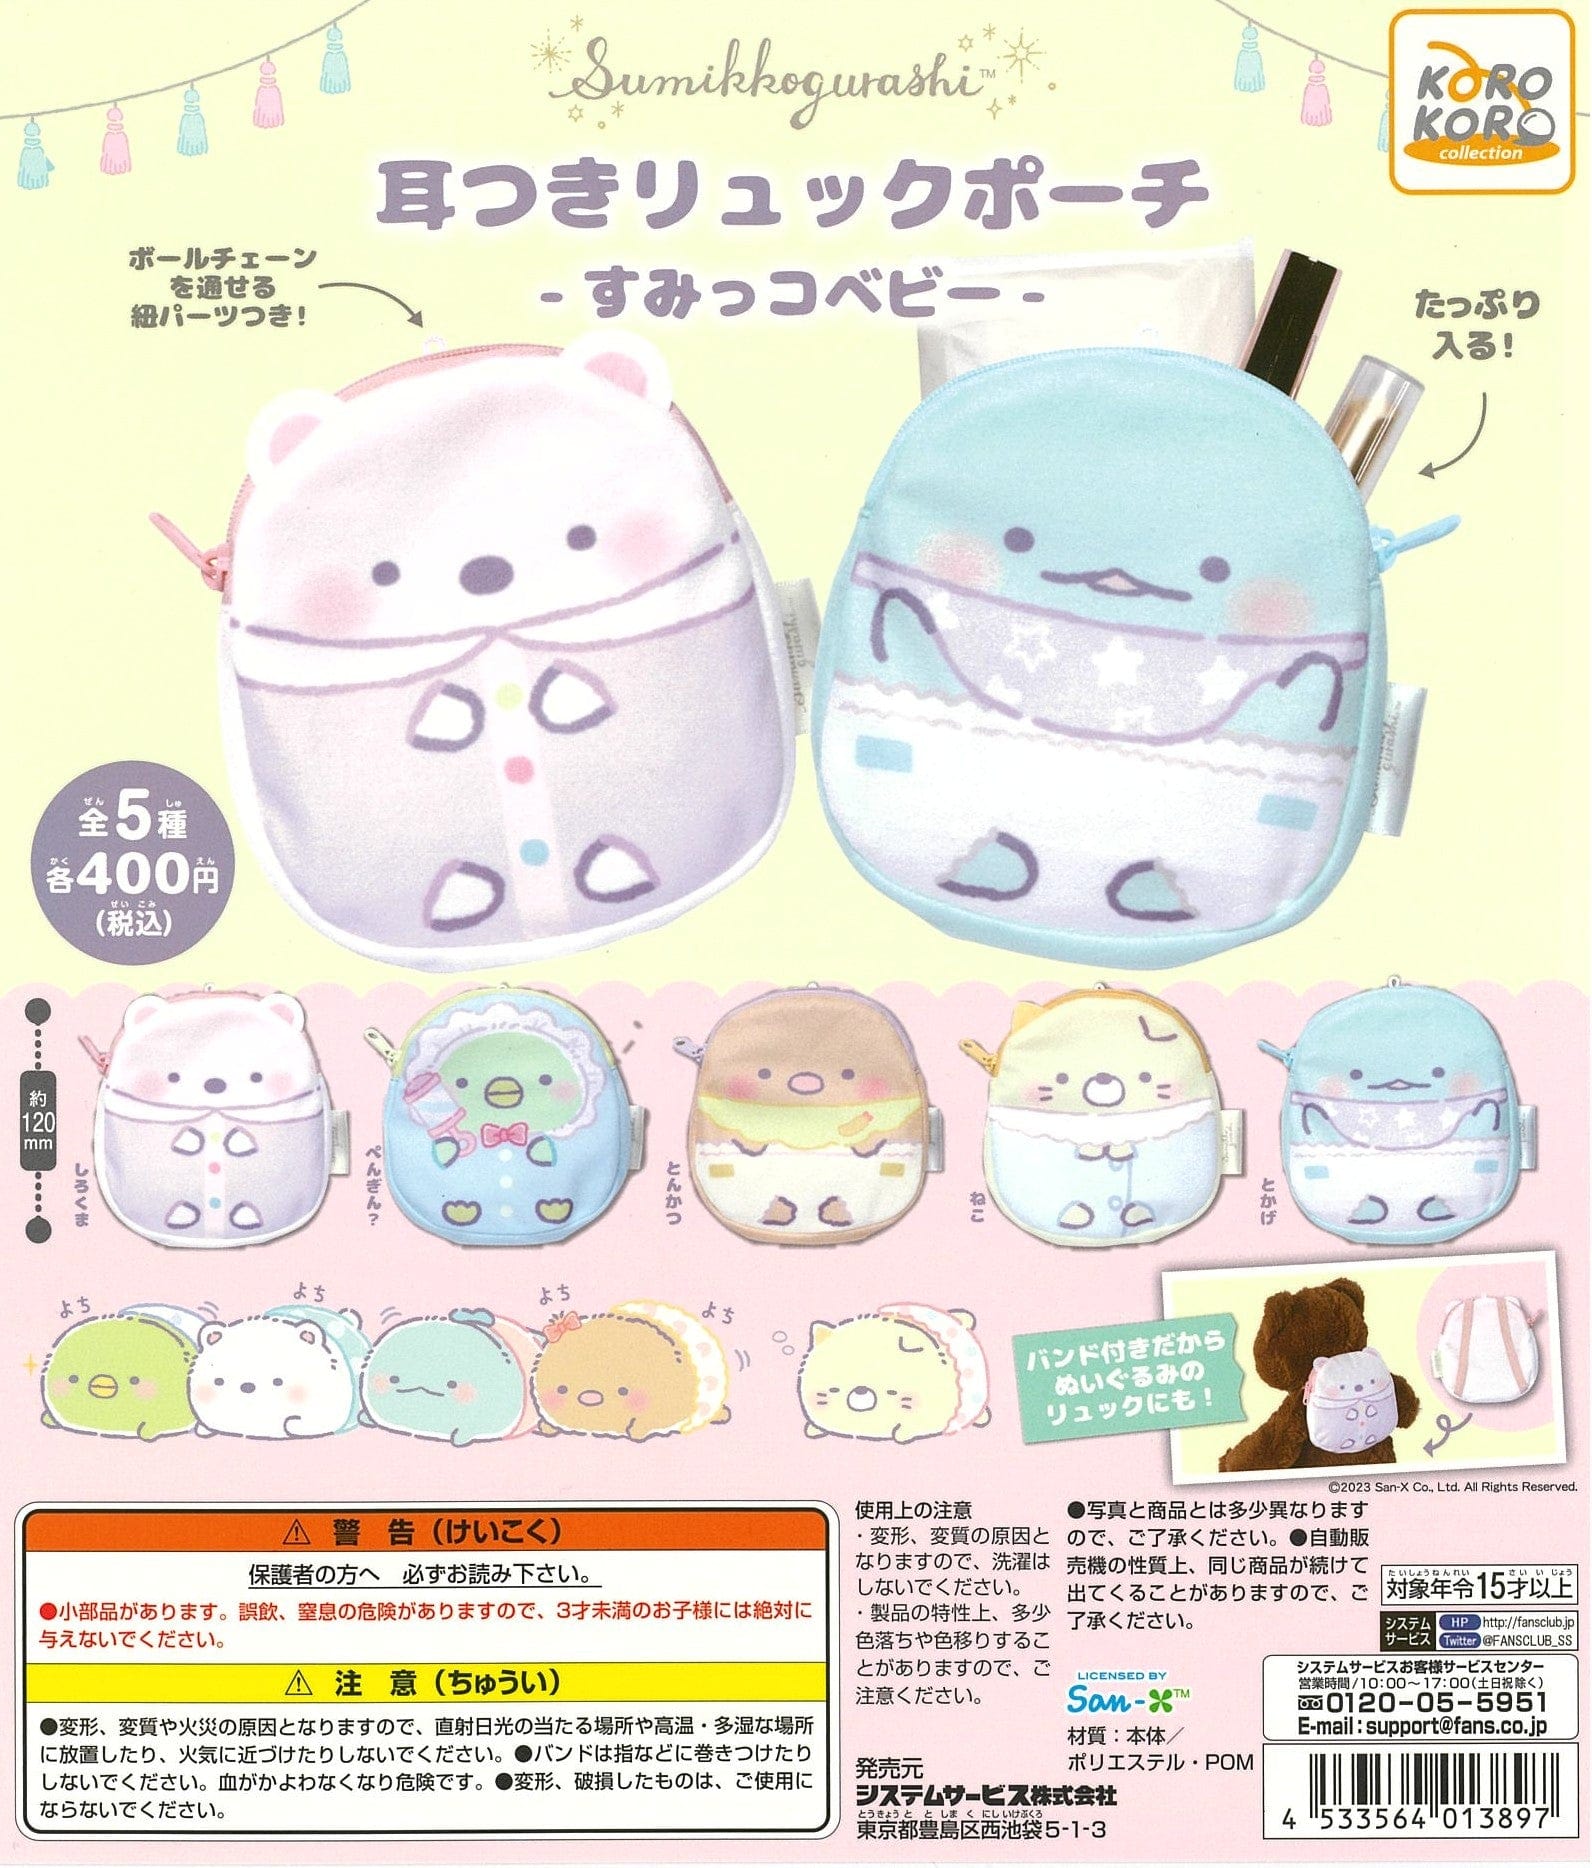 KoroKoro Collection CP2333 Sumikkogurashi Backpack Pouch with Ears Sumikko Baby